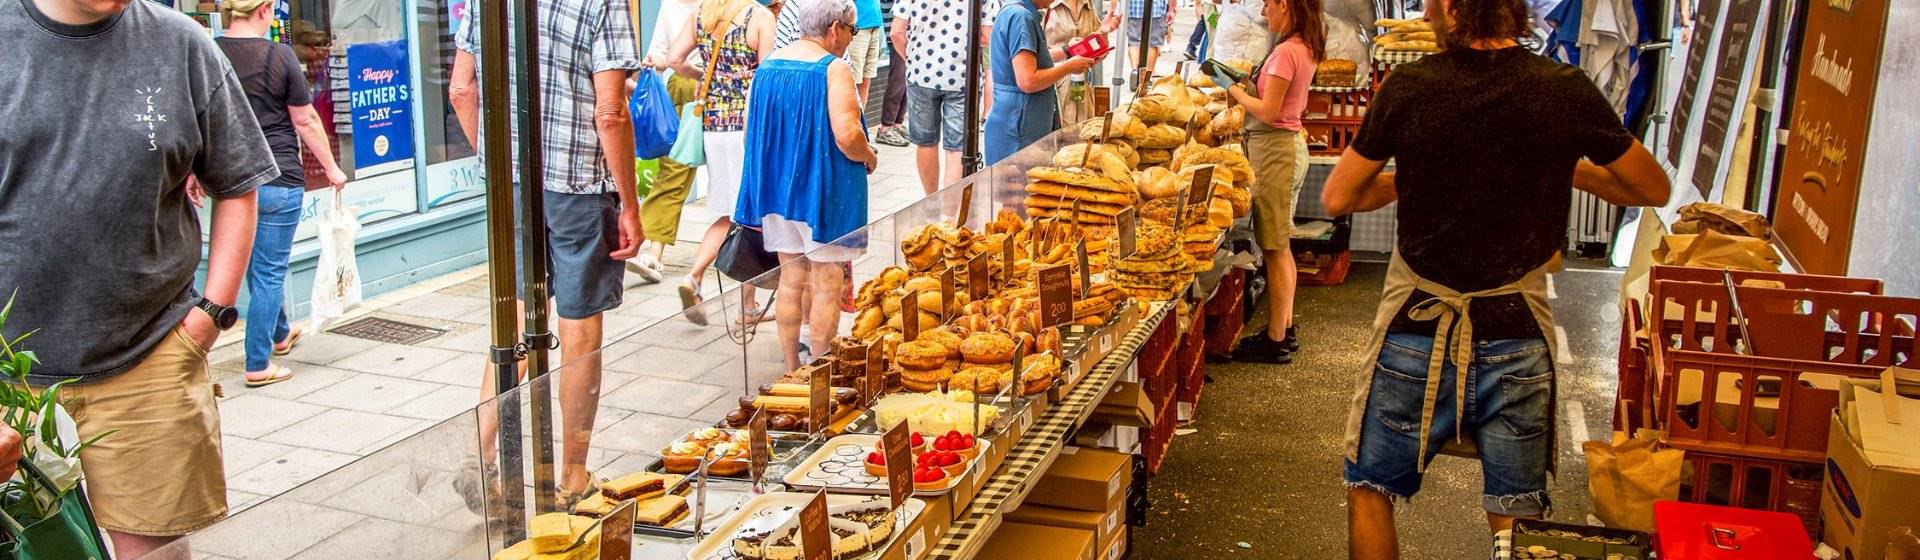 Tasty bread stall at Lymington Market Photo Credit William Bonnet